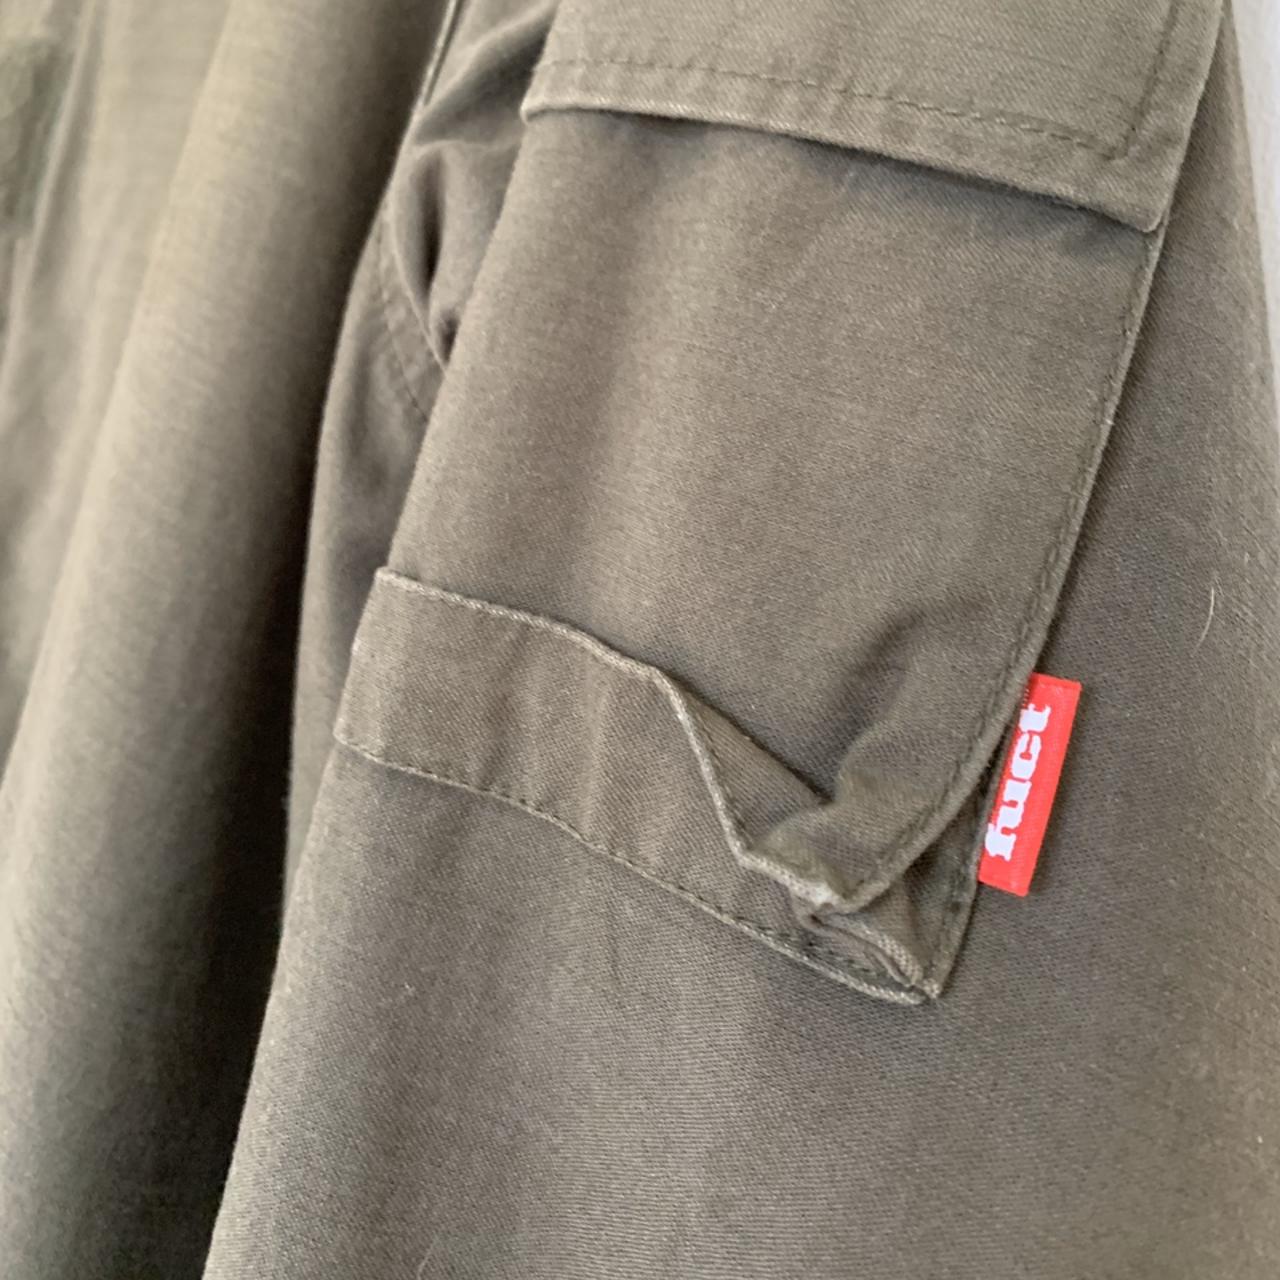 FUCT SSDD LA Anarchy Gield Jacket Khaki, Size XL...